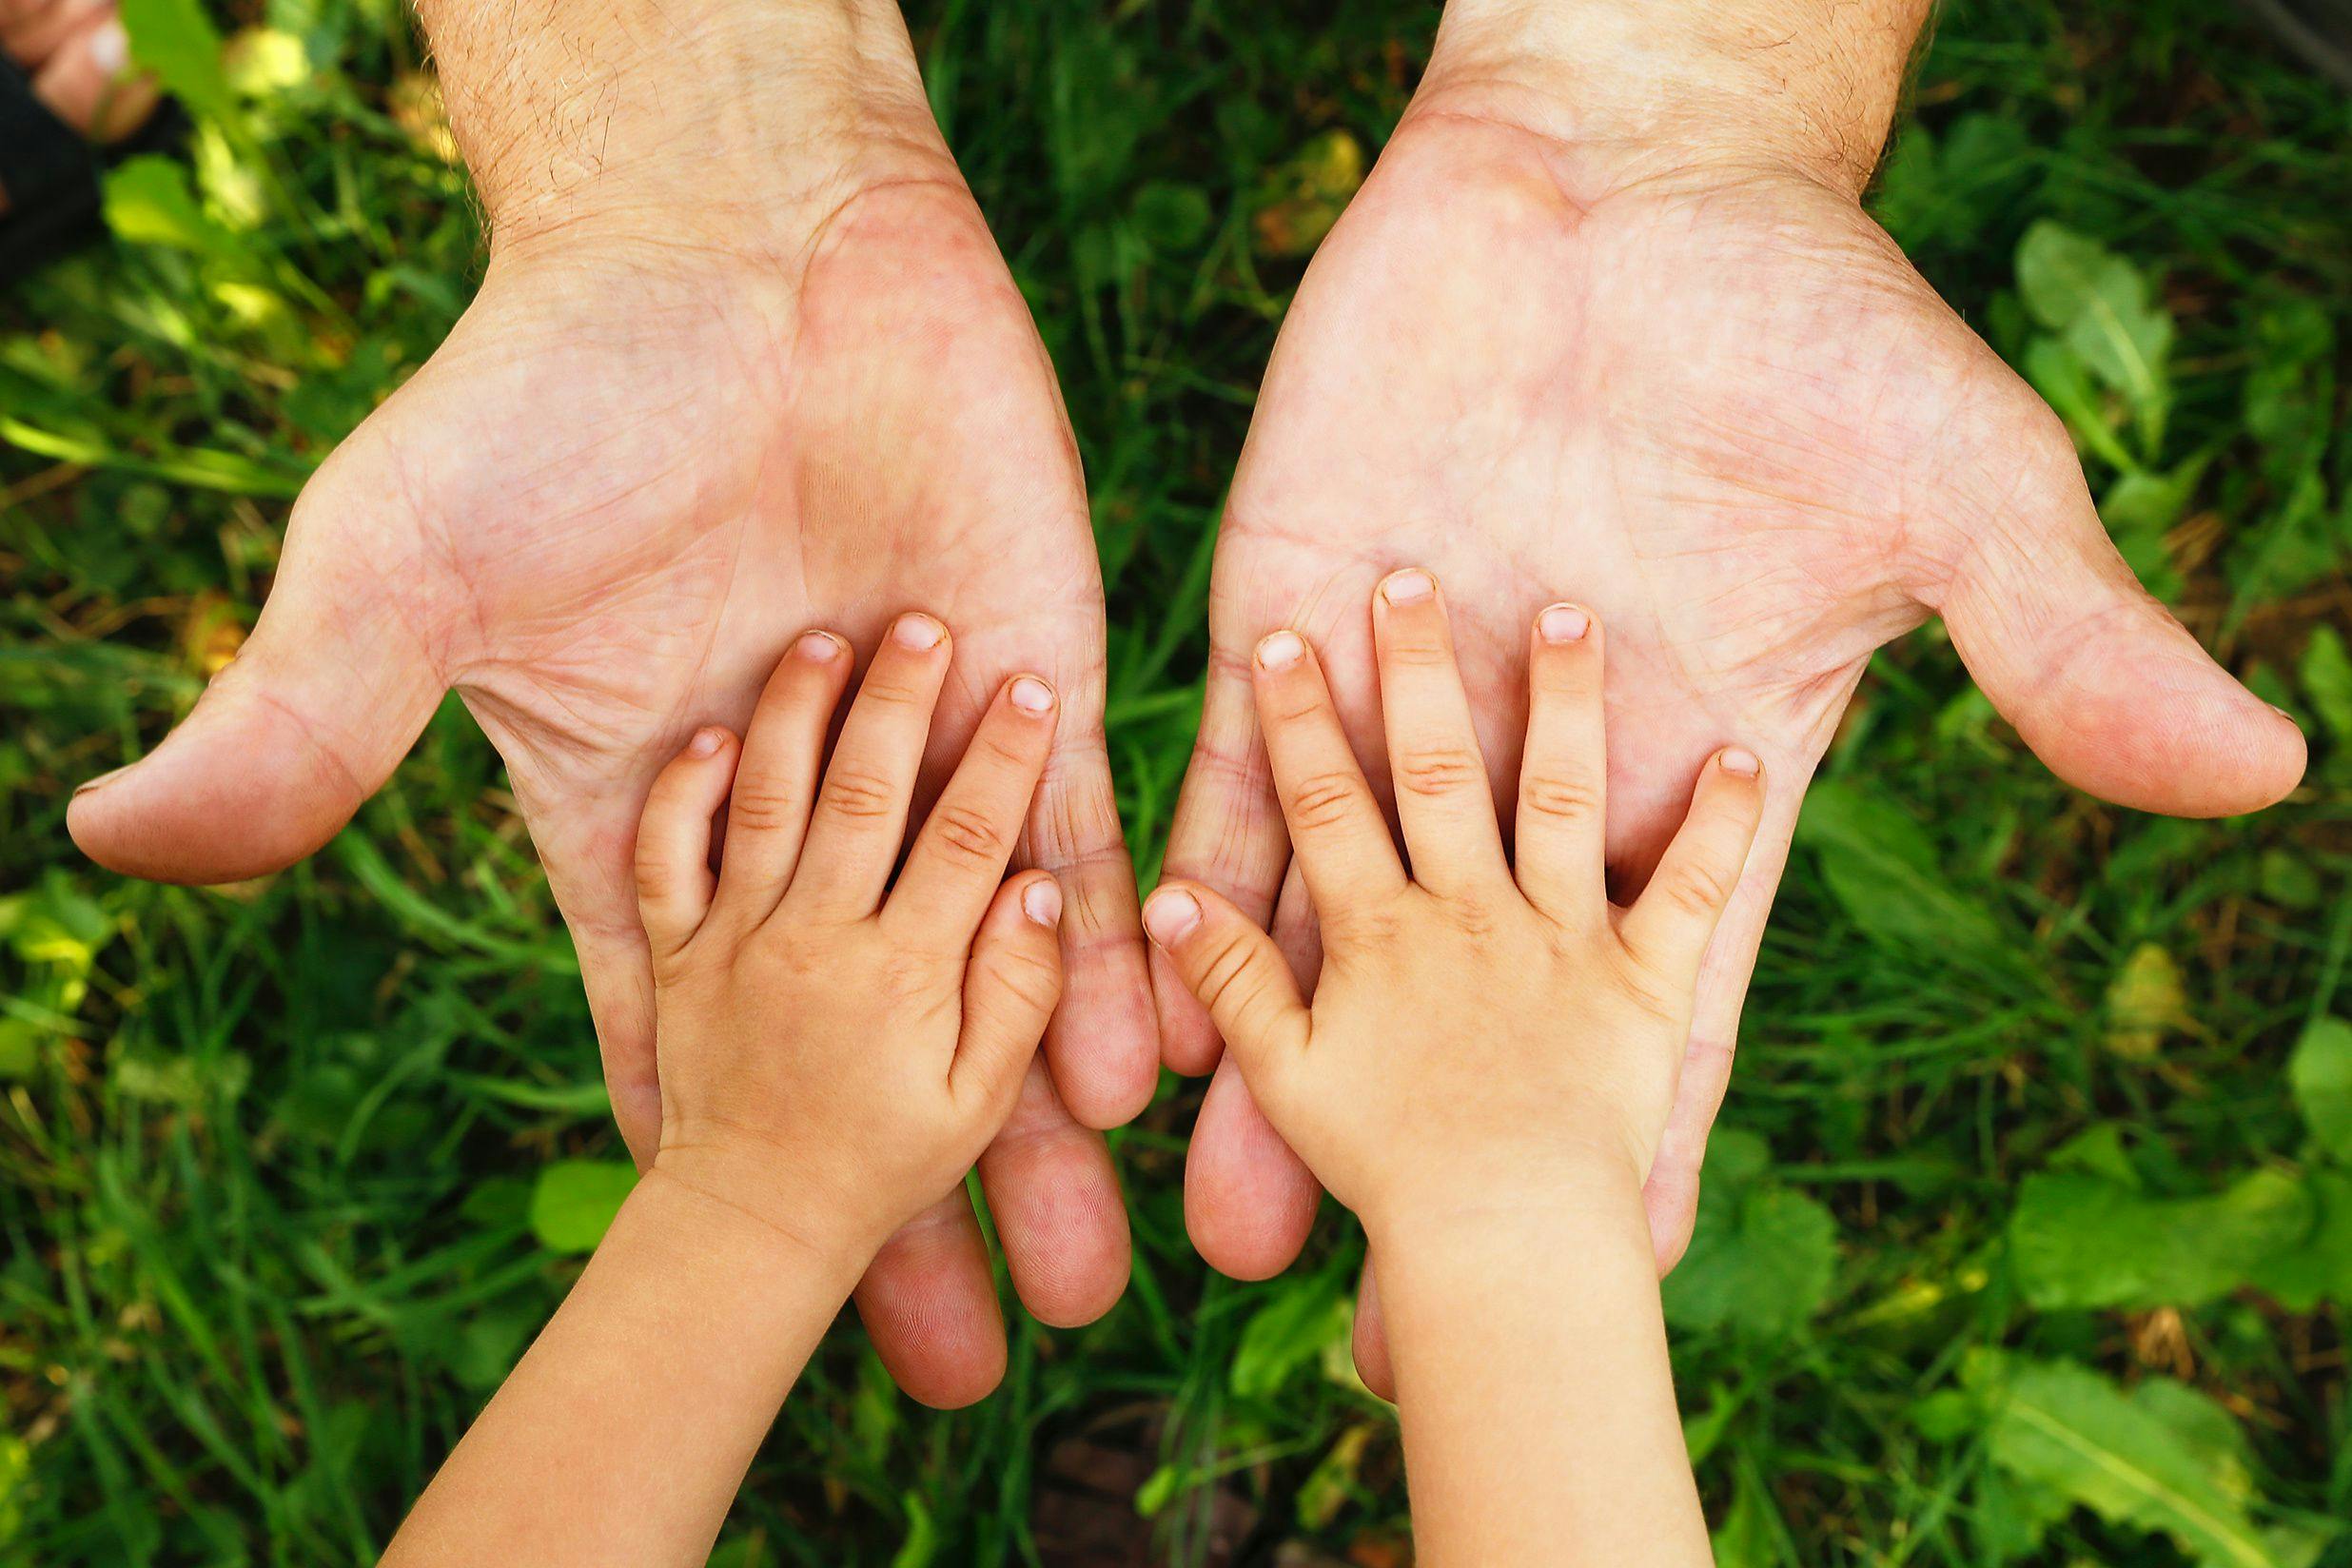 Parent and Child Hands | Image Credit: gera85 - stock.adobe.com